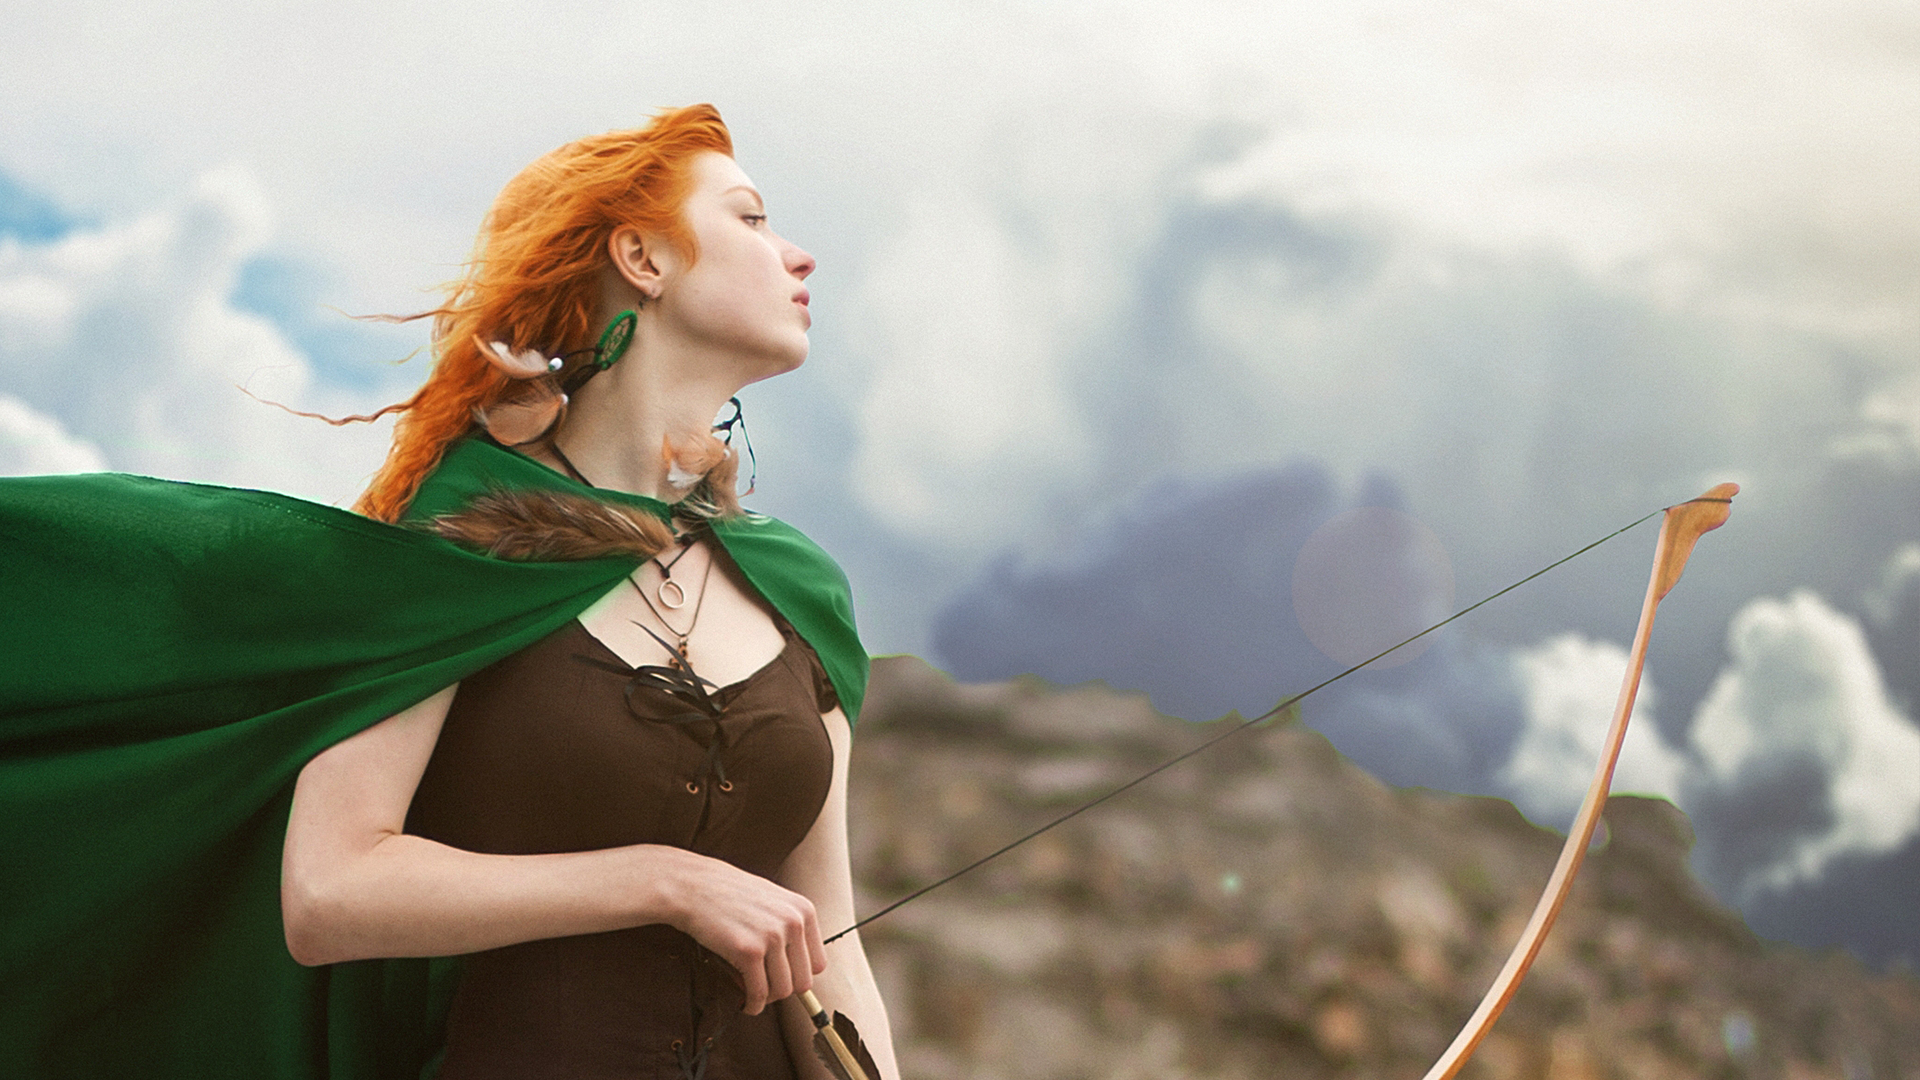 People 1920x1080 women cosplay archery Brave redhead Princess Merida